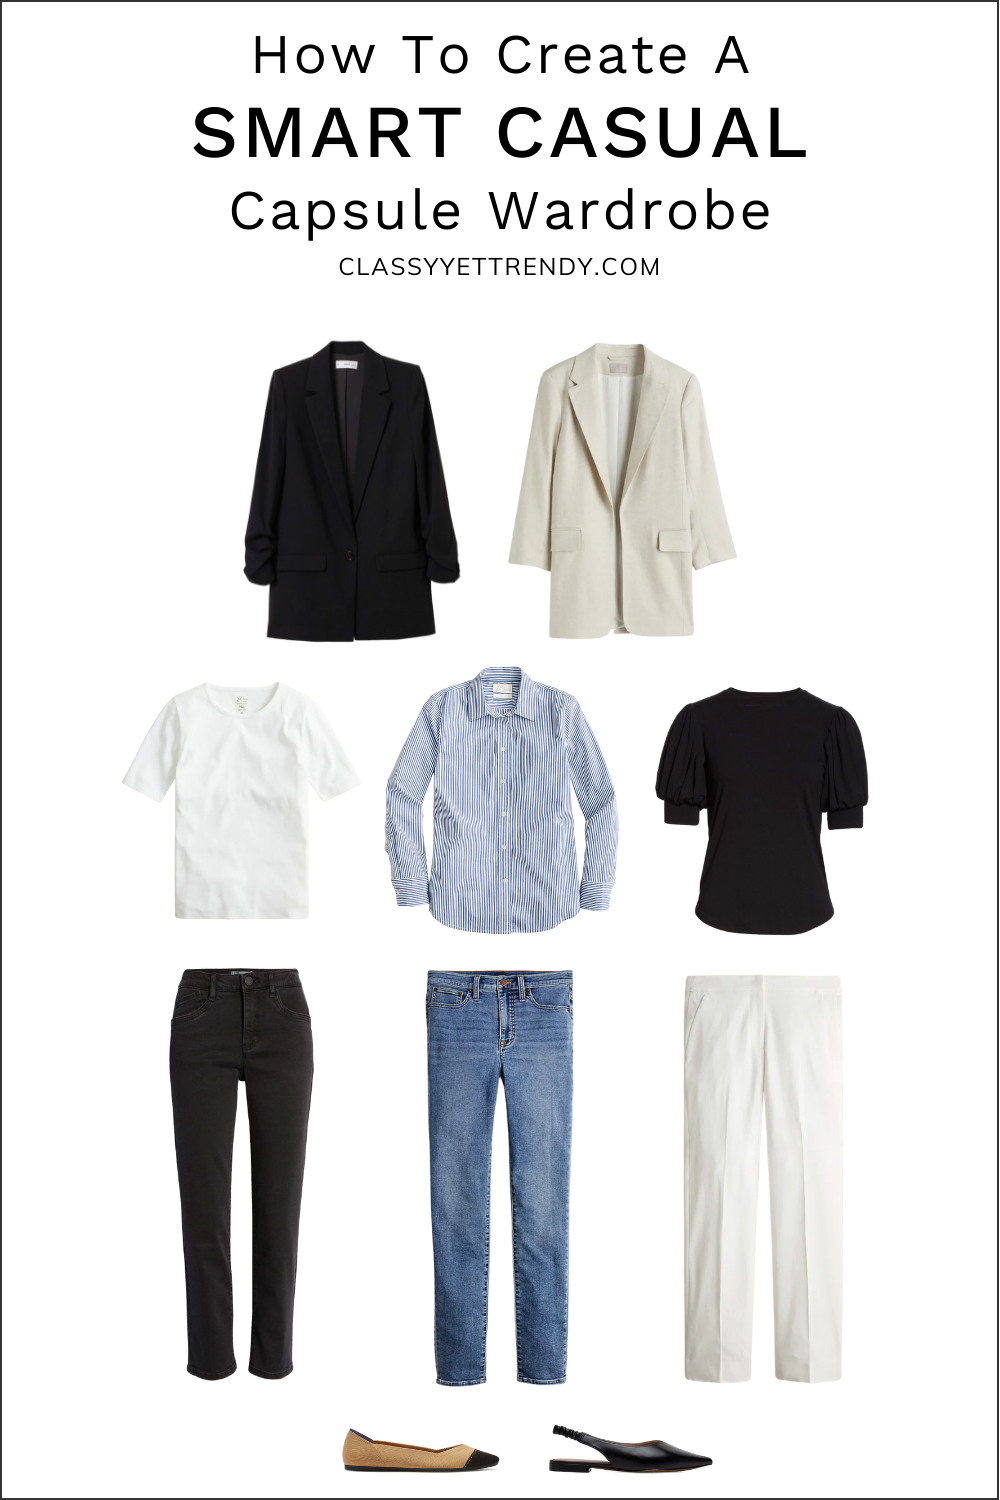 workplace wardrobe essentials  Wardrobe essentials, Business professional  outfits, Office wardrobe